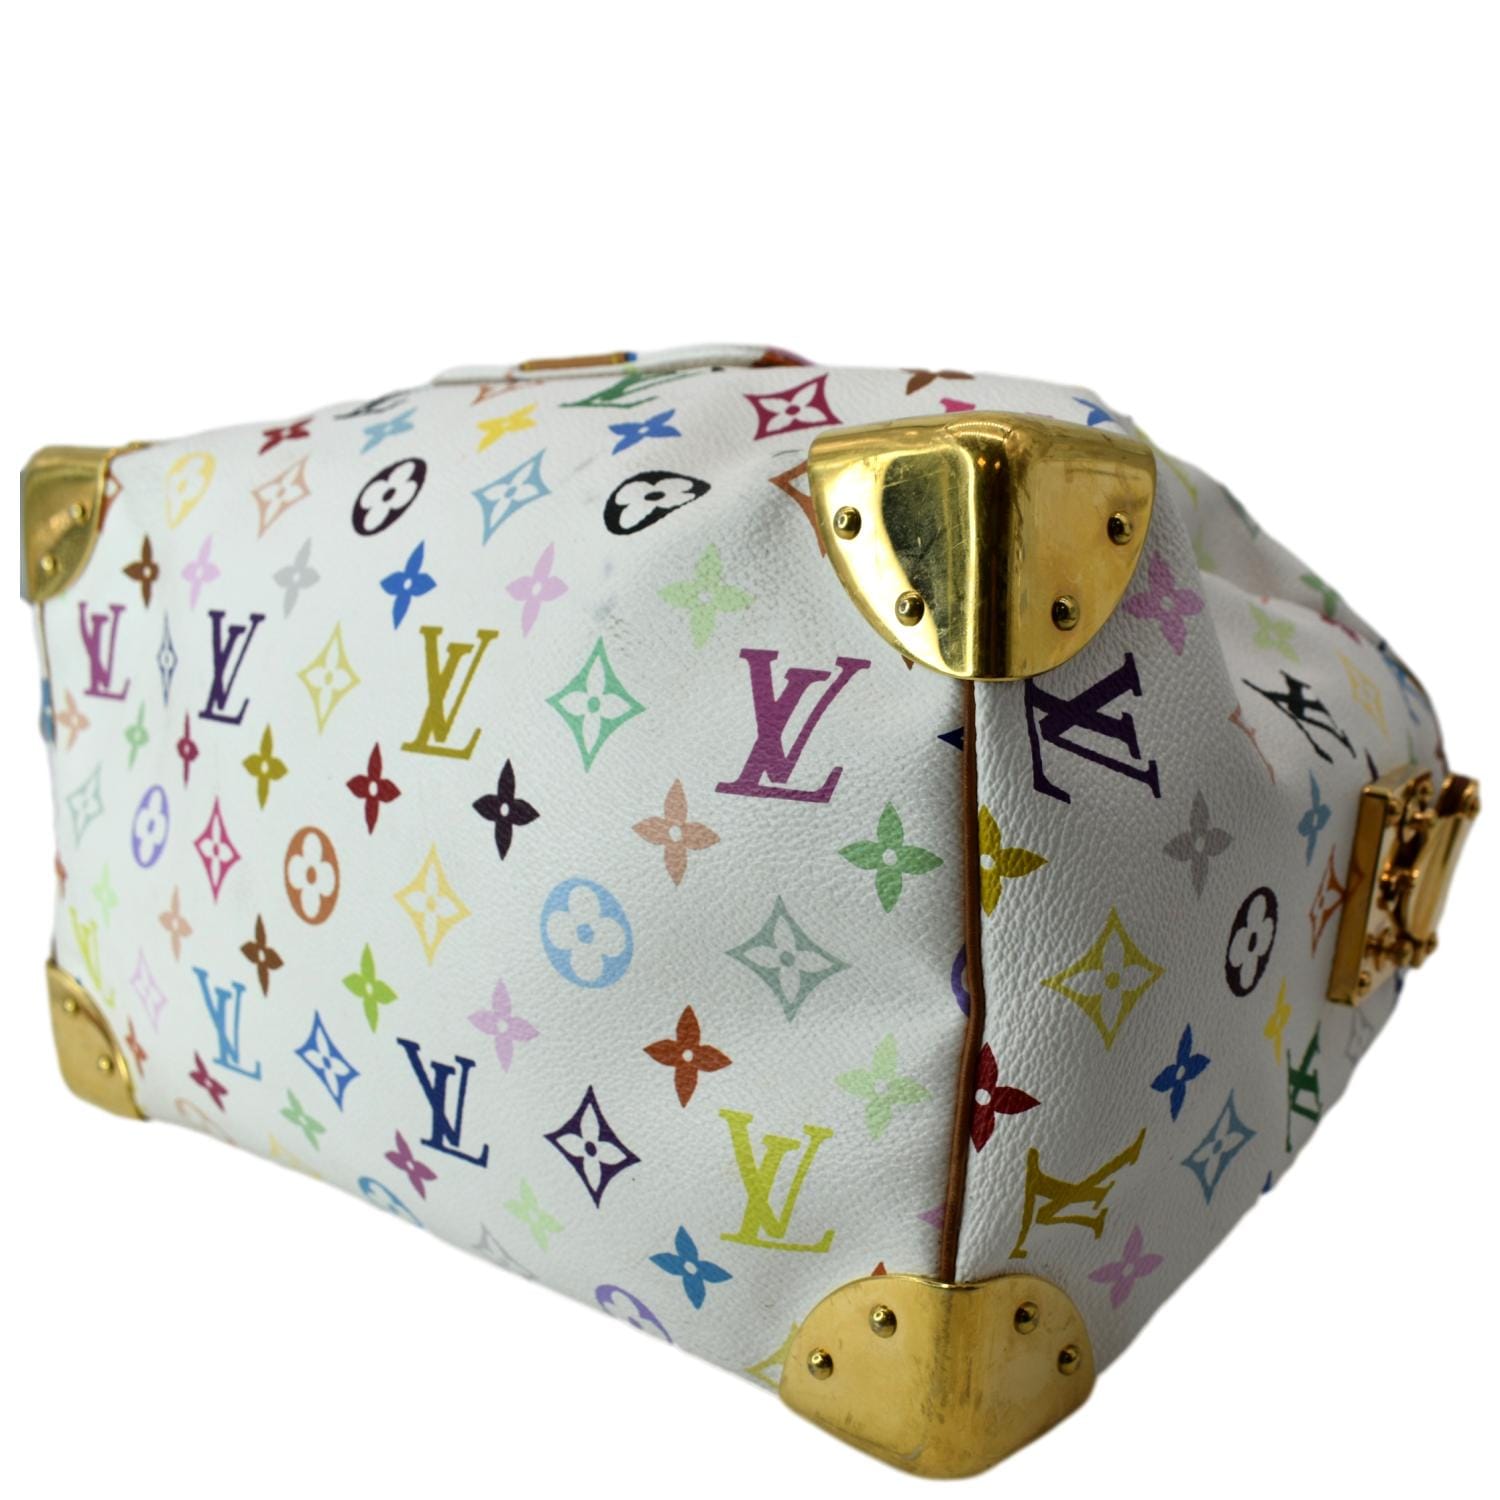 Louis Vuitton Pre-Loved Speedy 30 bag for Women - Multicolored in UAE